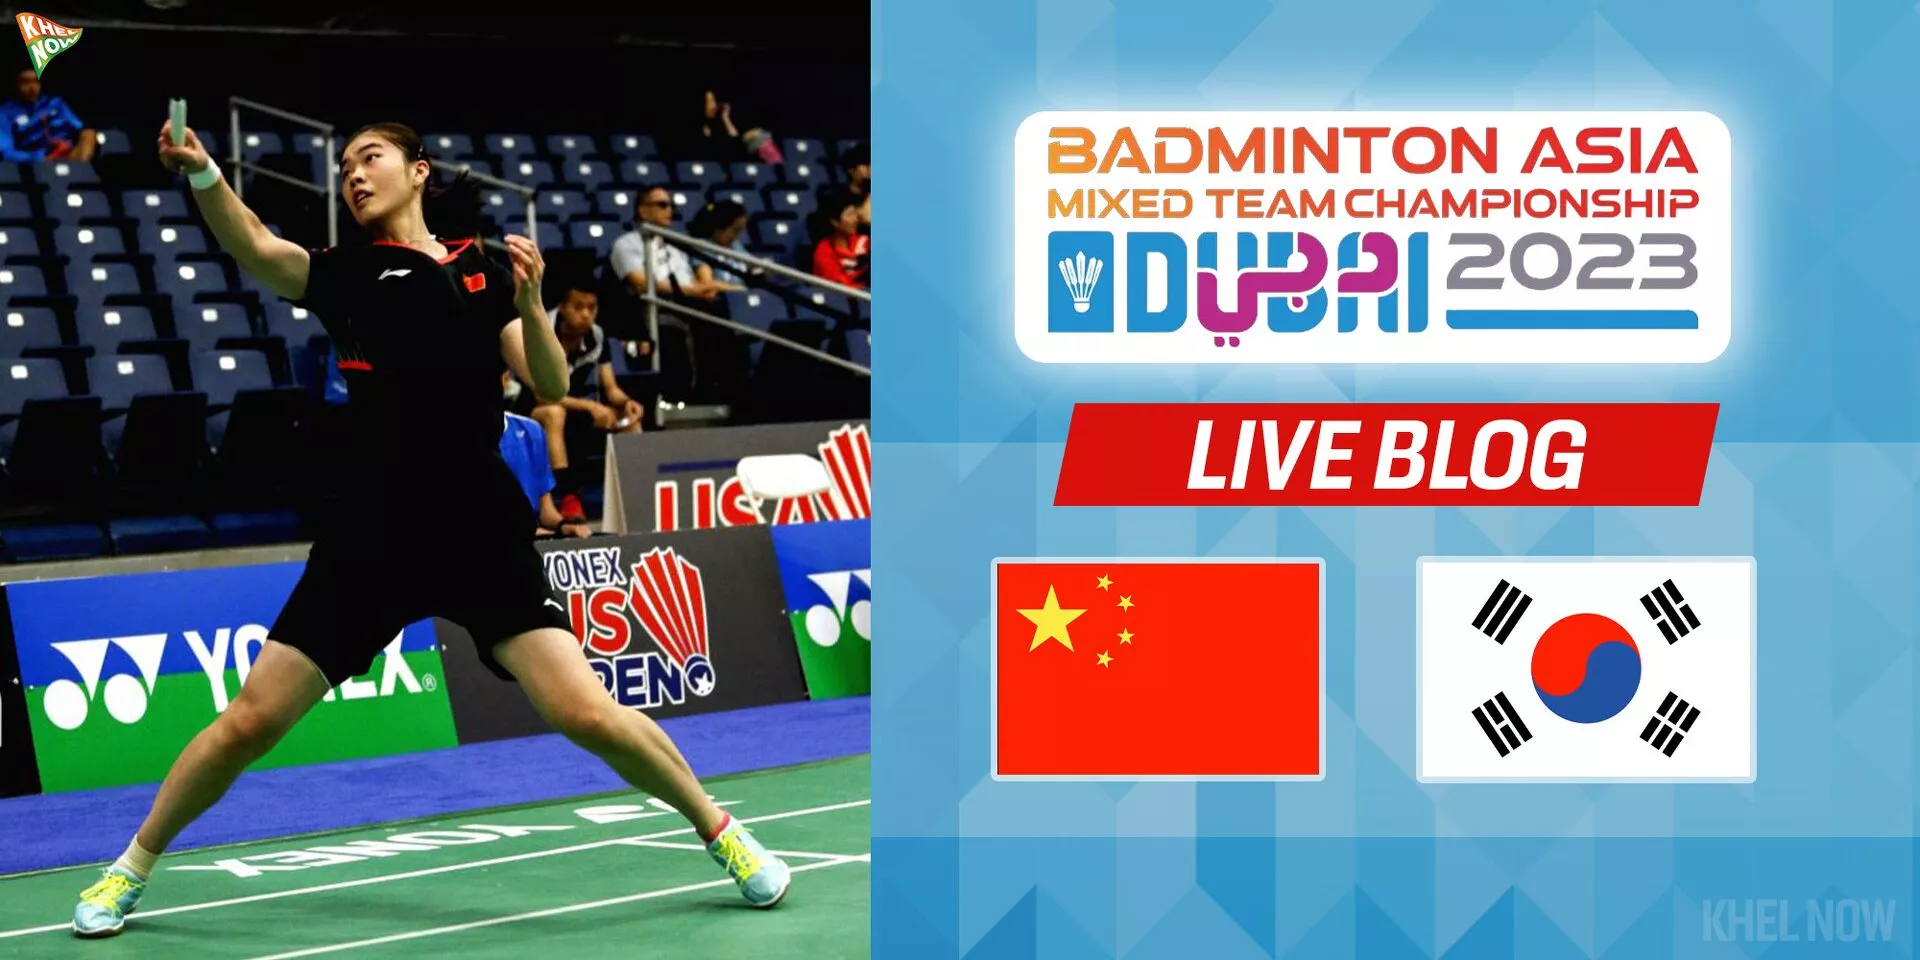 badminton asia team live